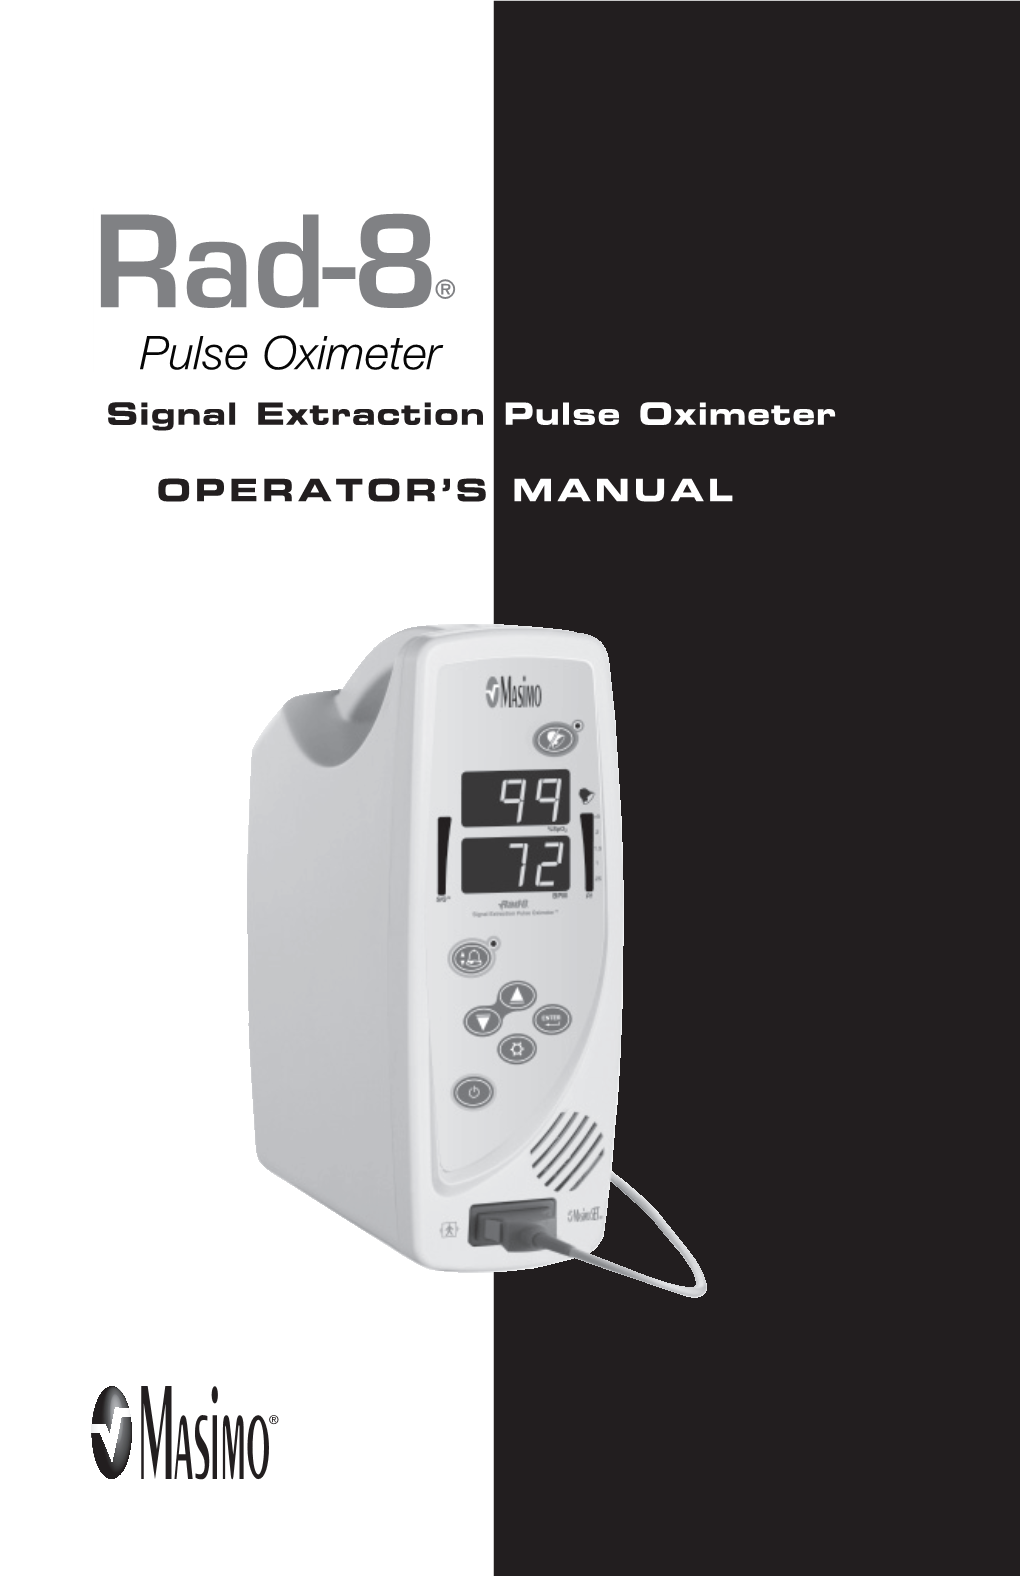 Rad-8 Pulse Oximeter Operators Manual